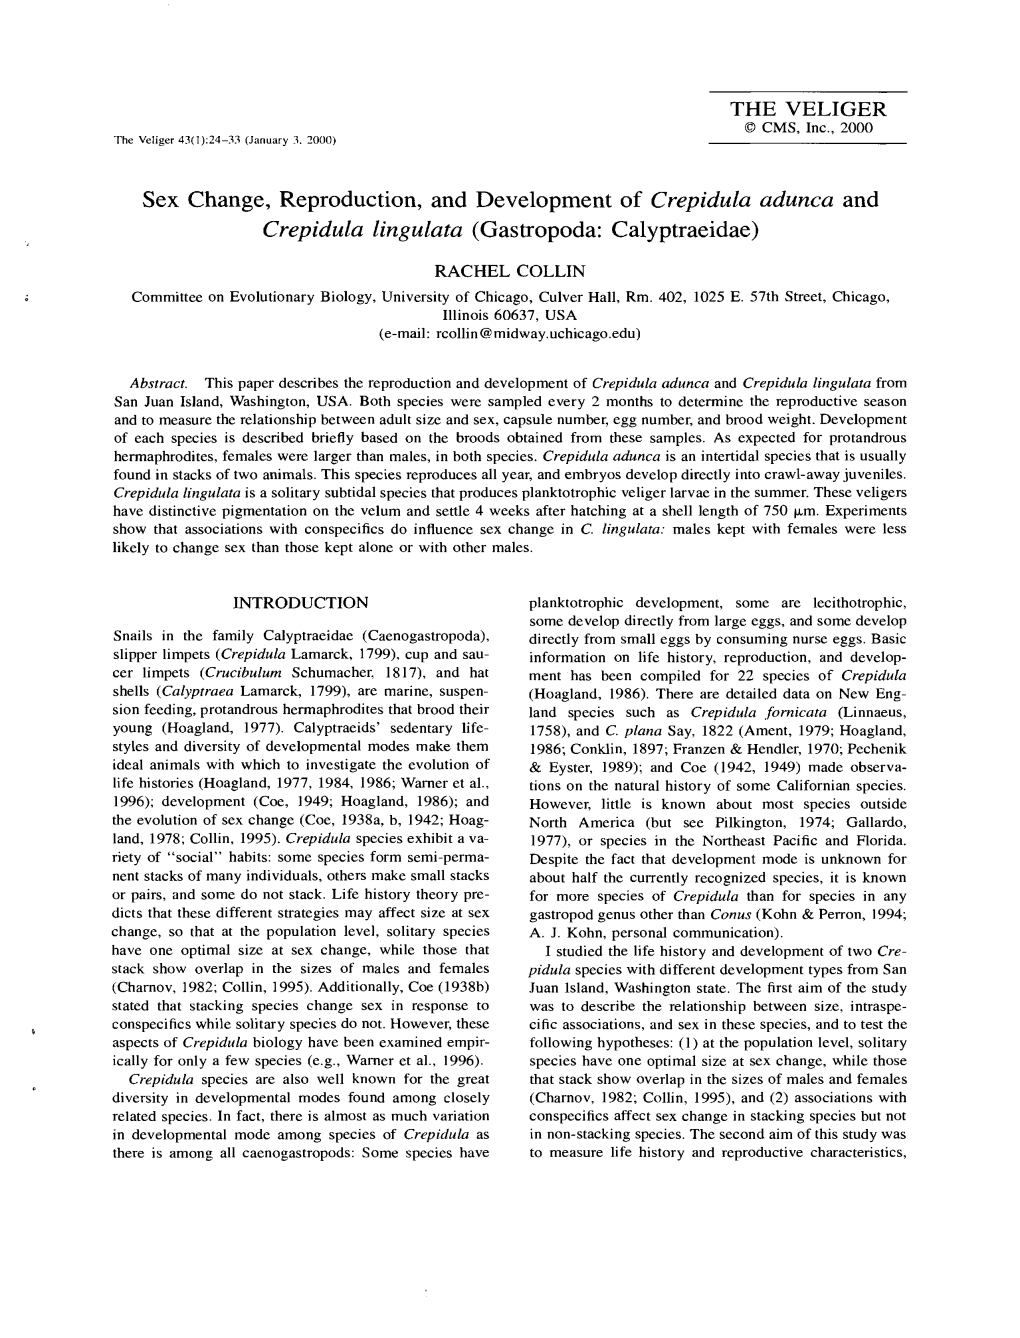 Sex Change, Reproduction, and Development of Crepidula Adunca and Crepidula Lingulata (Gastropoda: Calyptraeidae)